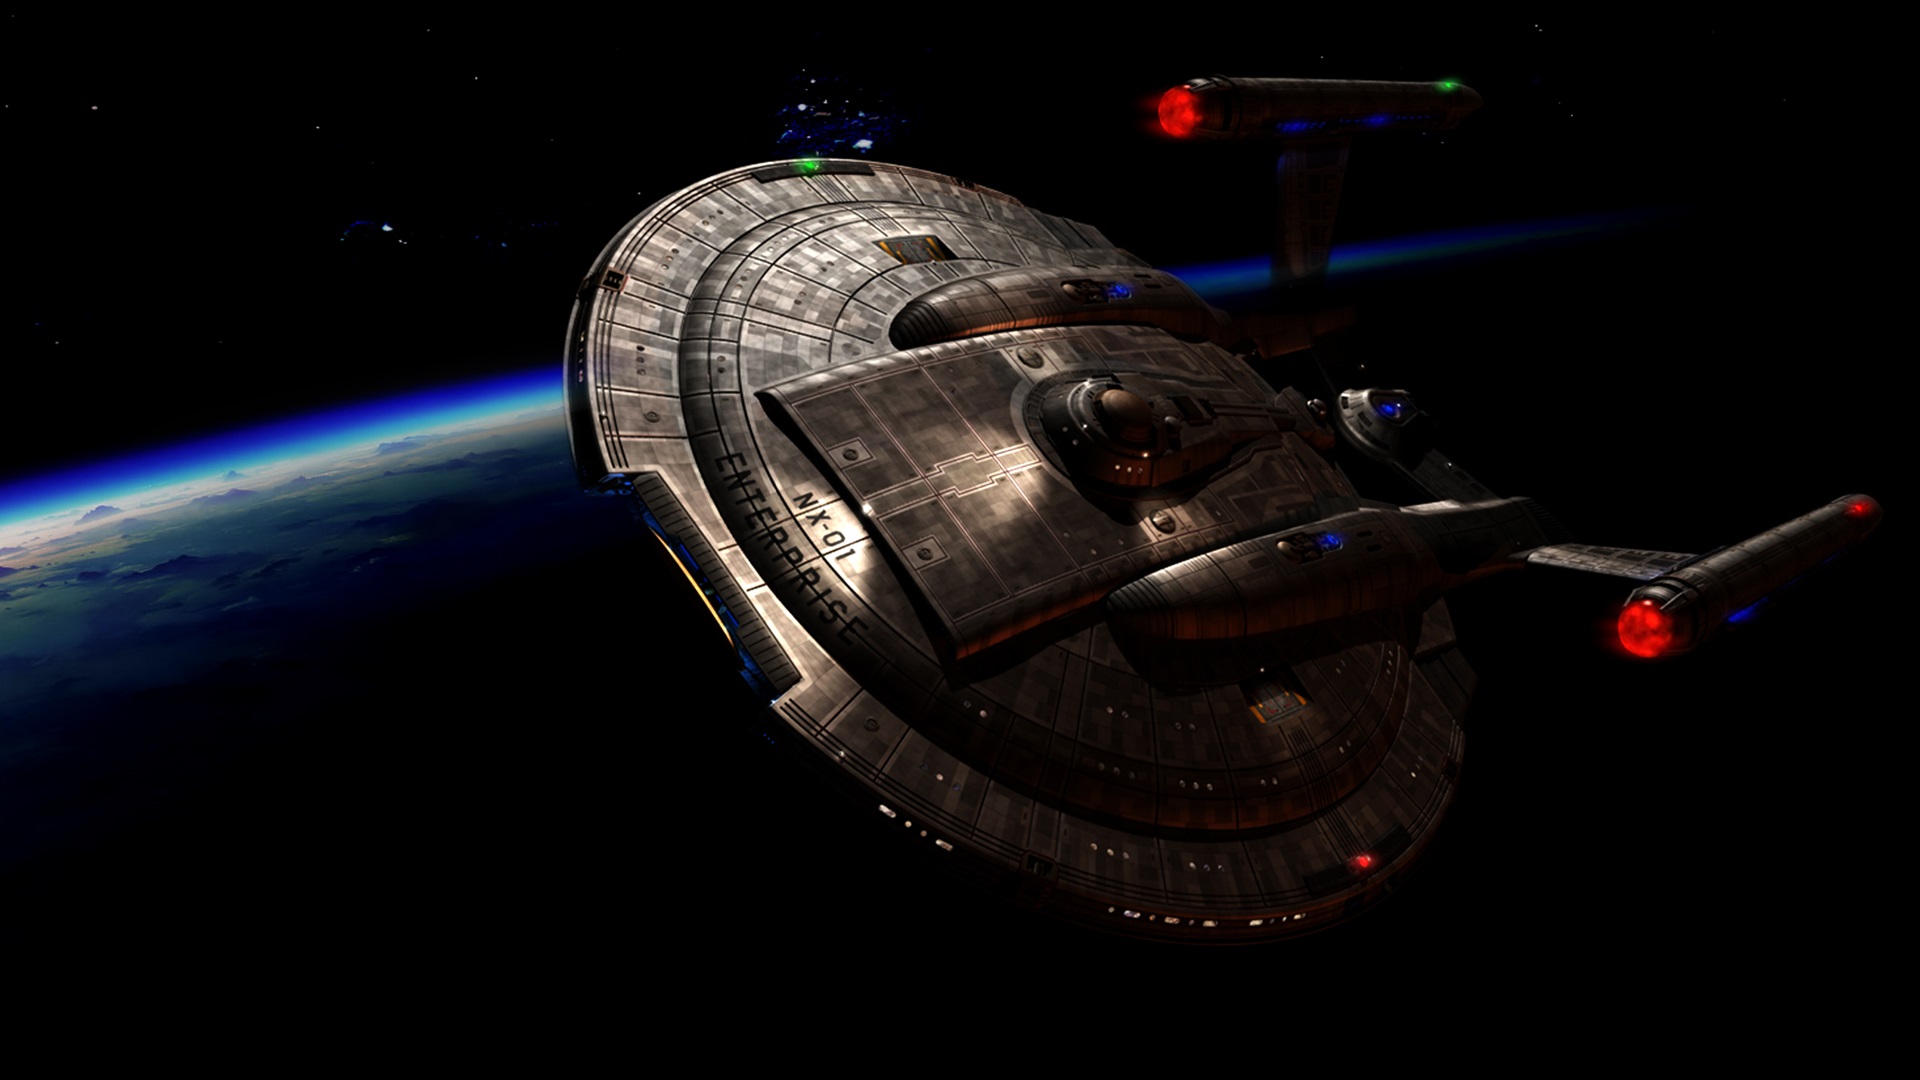 Star Trek: Enterprise Wallpapers